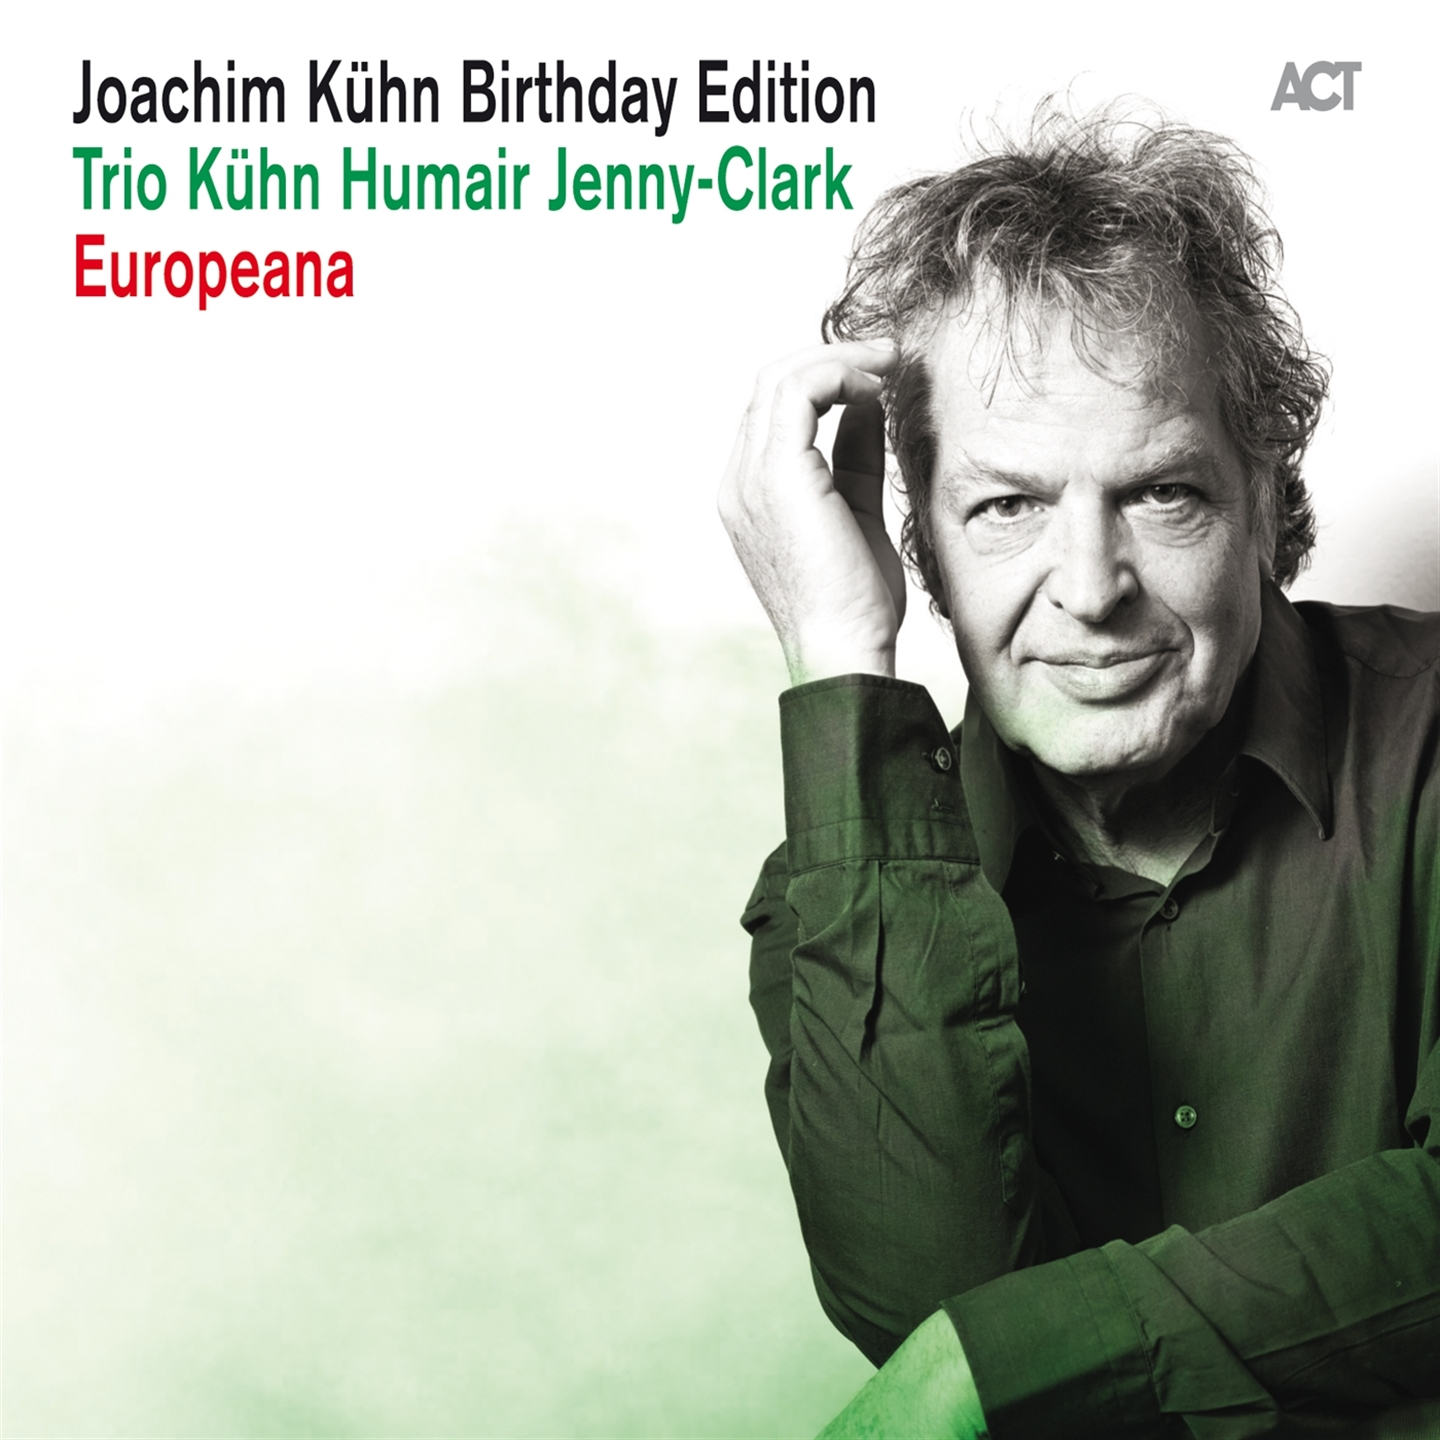 EUROPEANA - JOACHIM KUHN BIRTHDAY EDITION